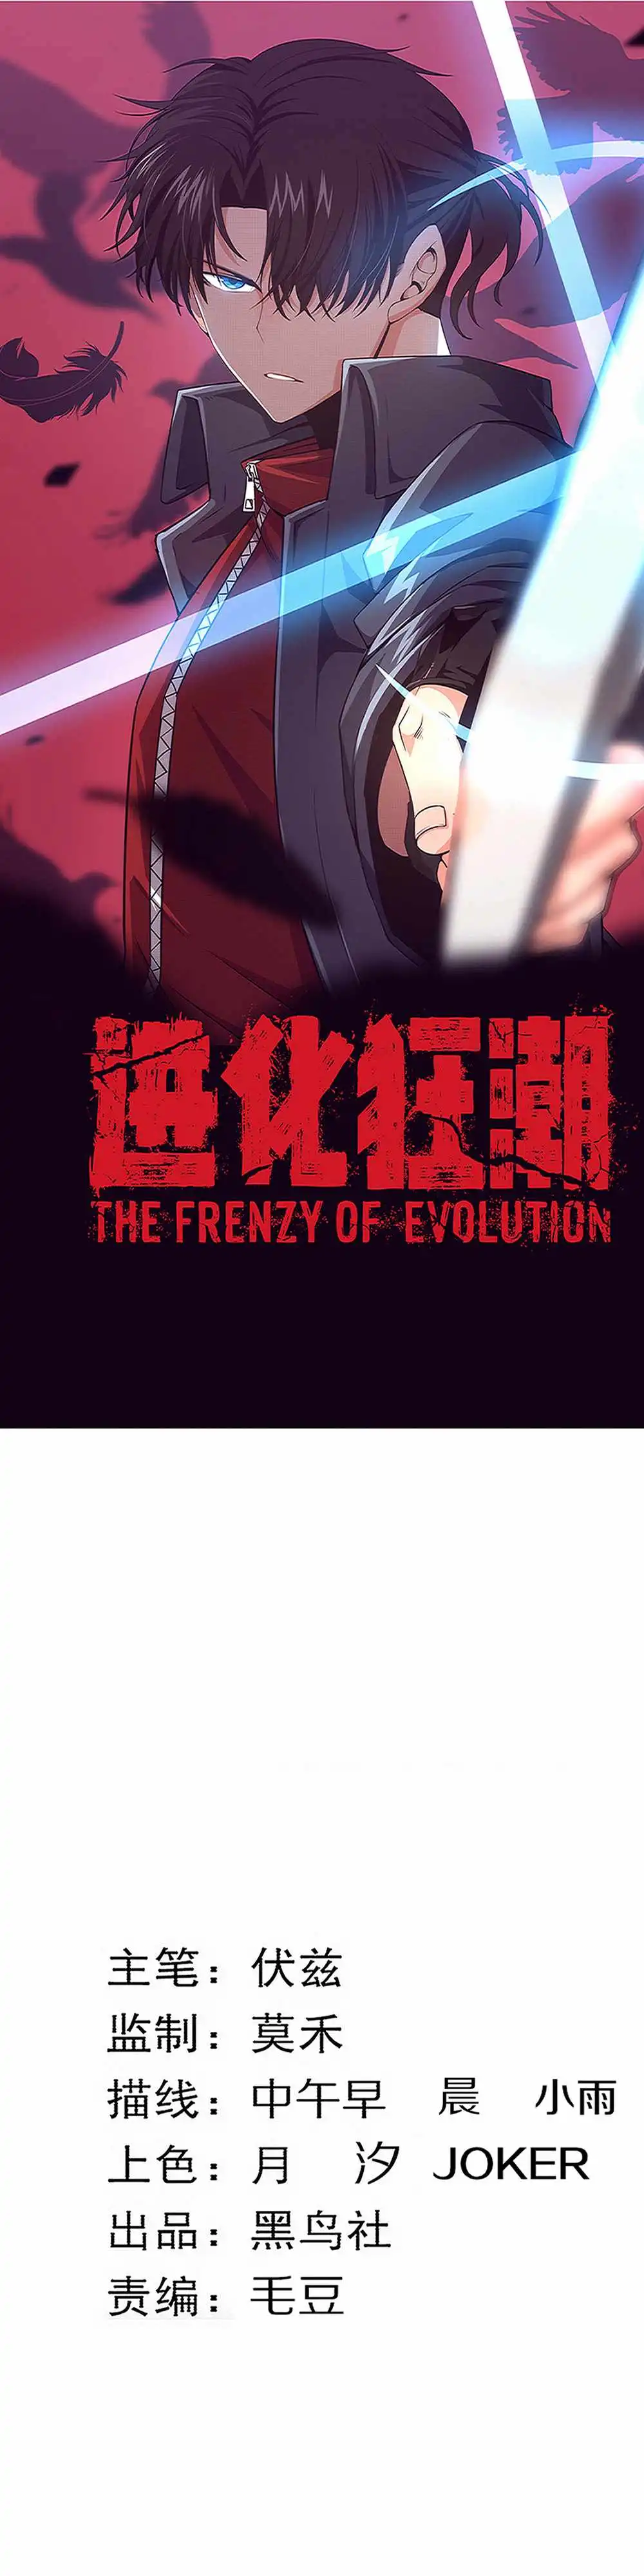 Evolution frenzy Chapter 126